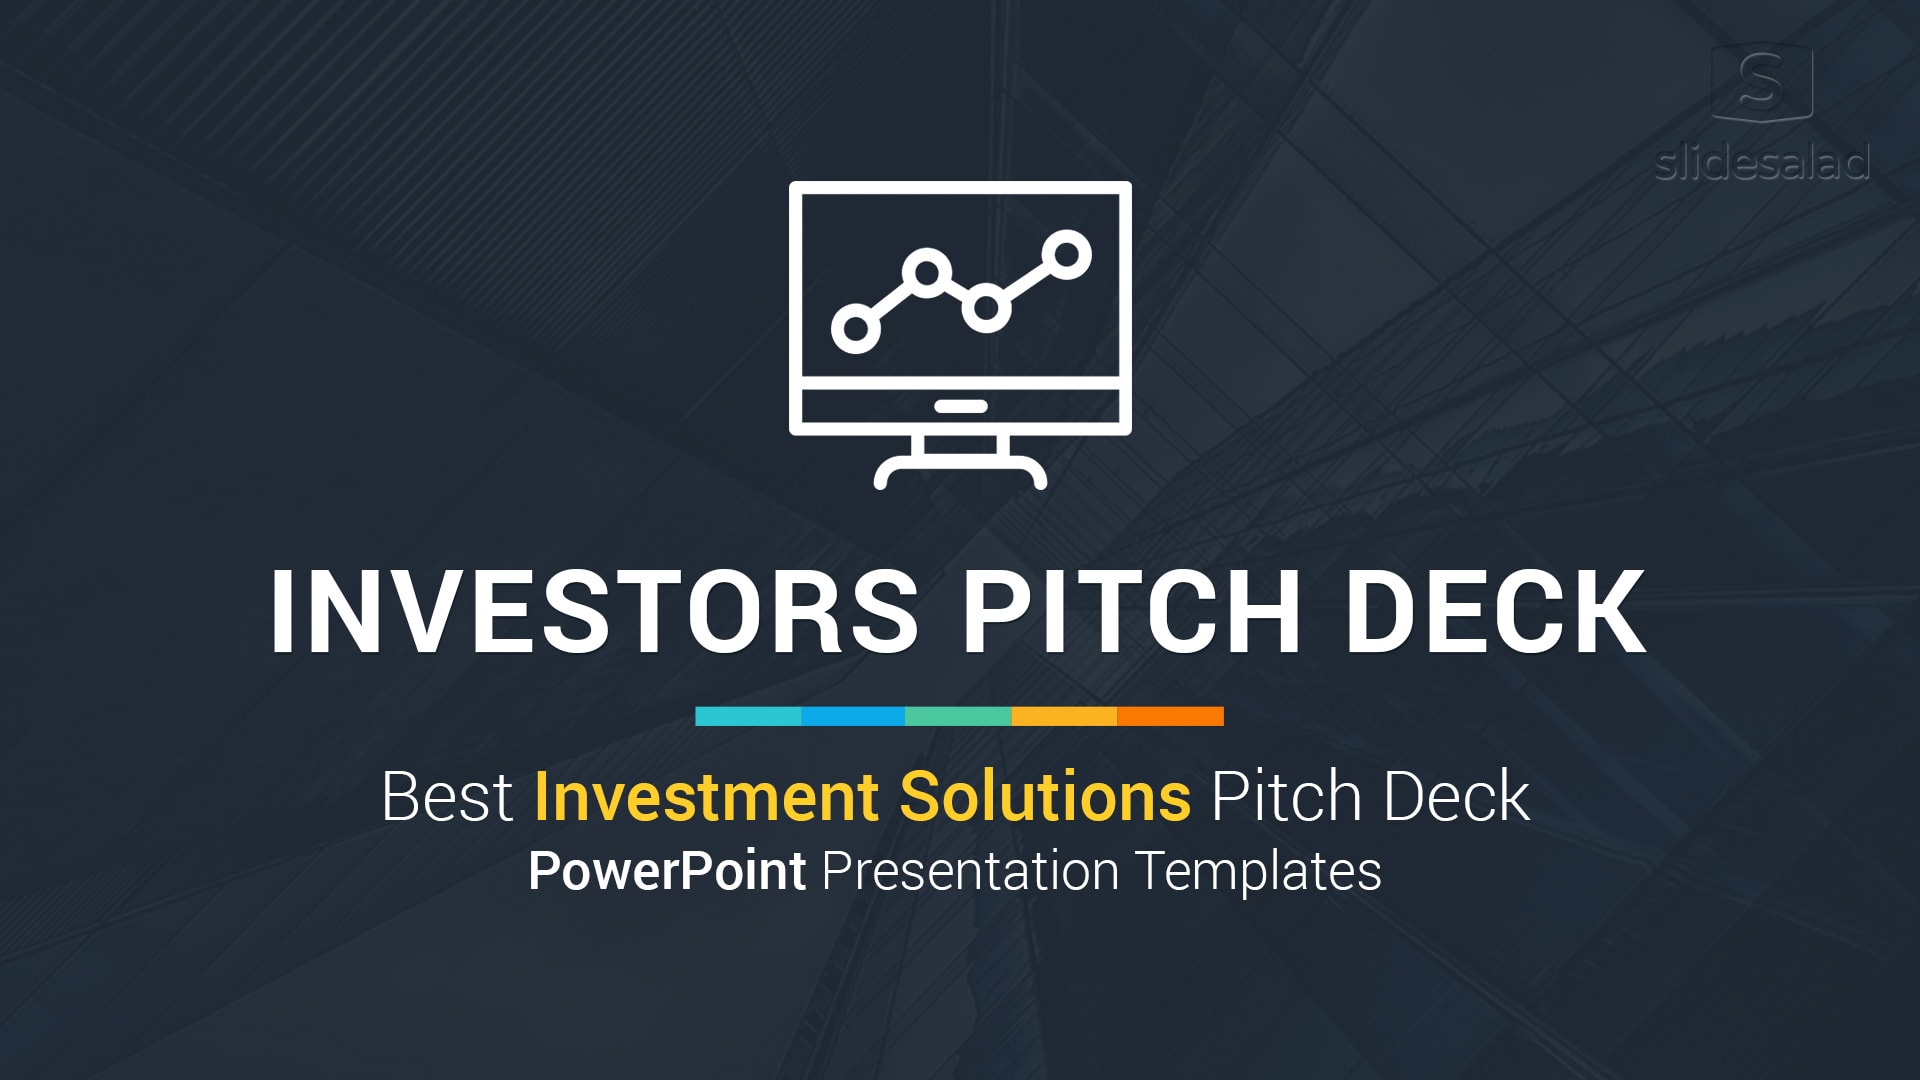 investor business plan presentation